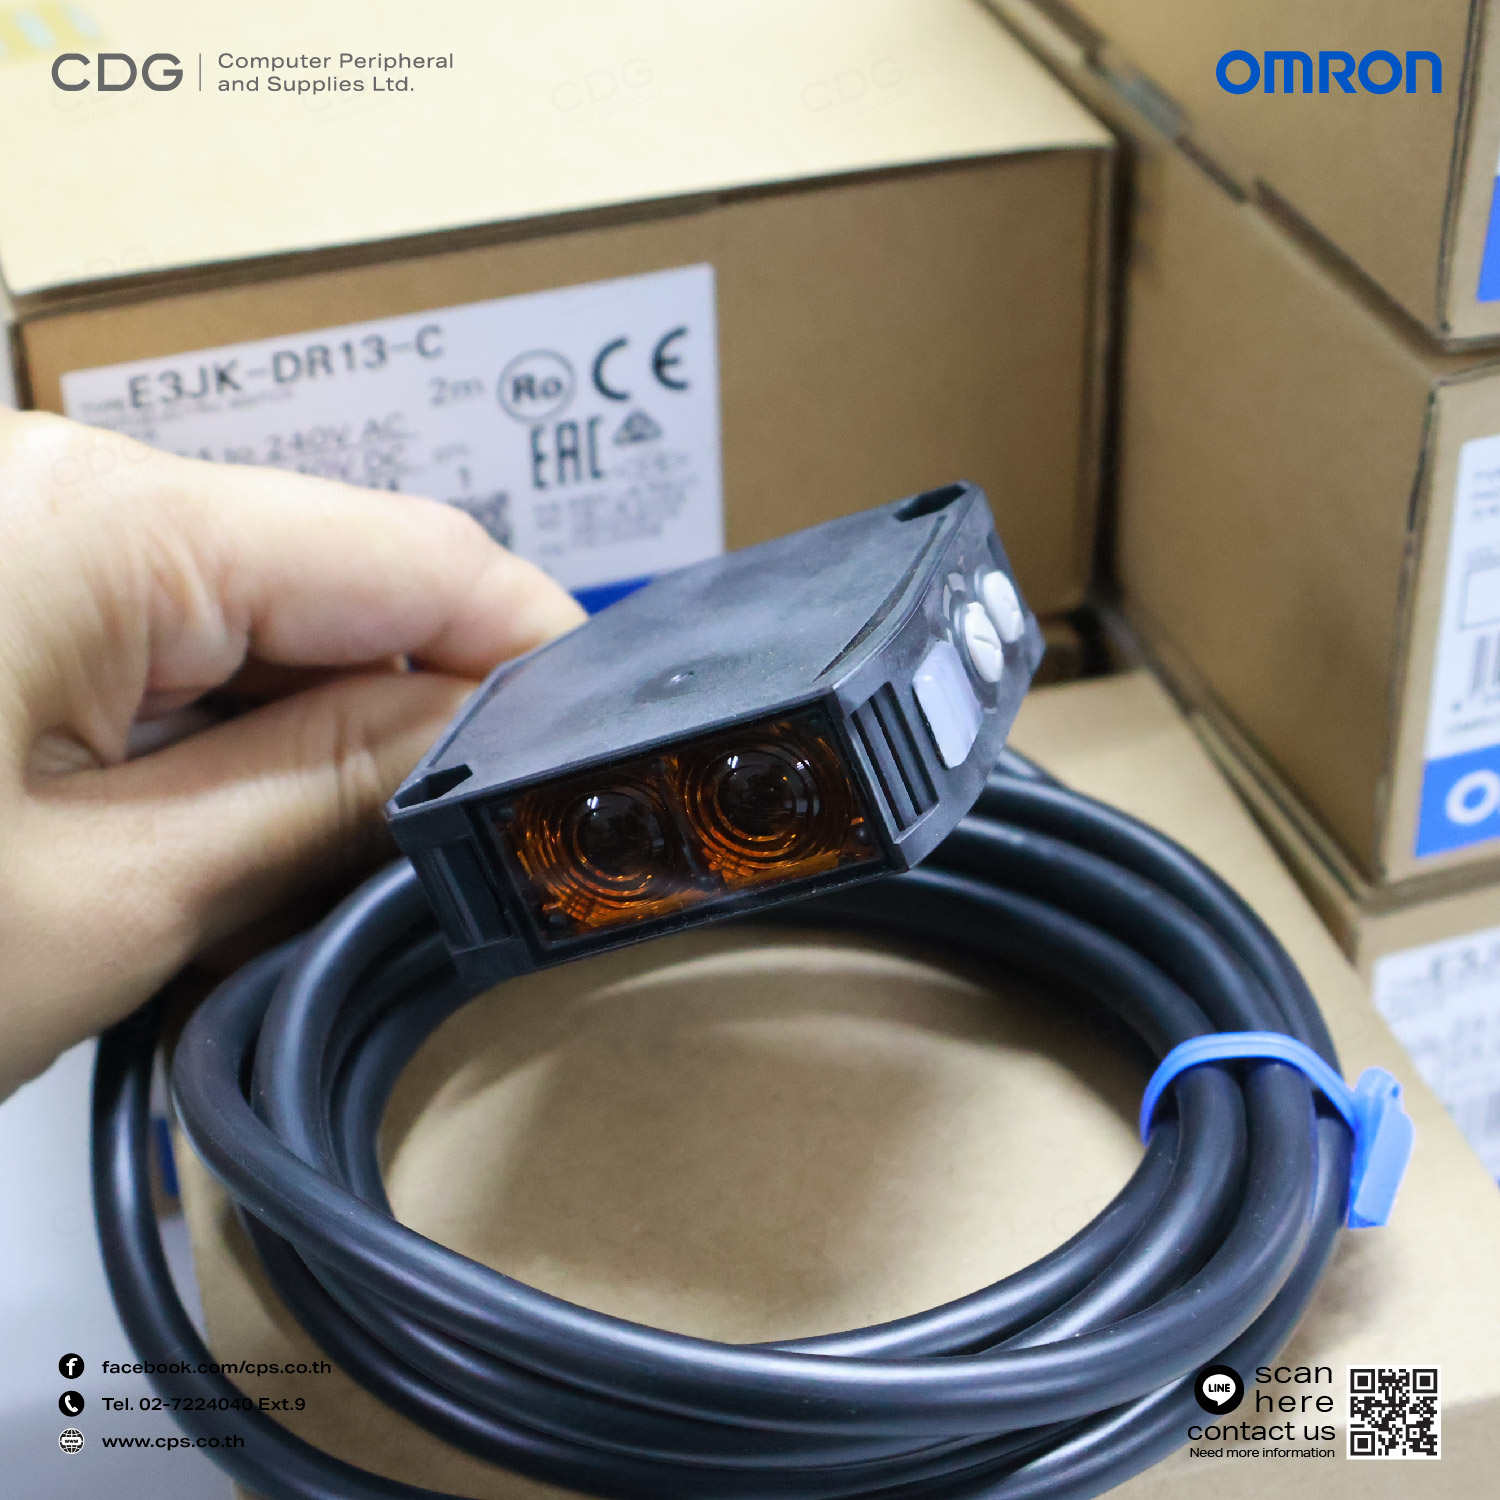 OMRON Photo Sensor E3JK-DR13-C 2M